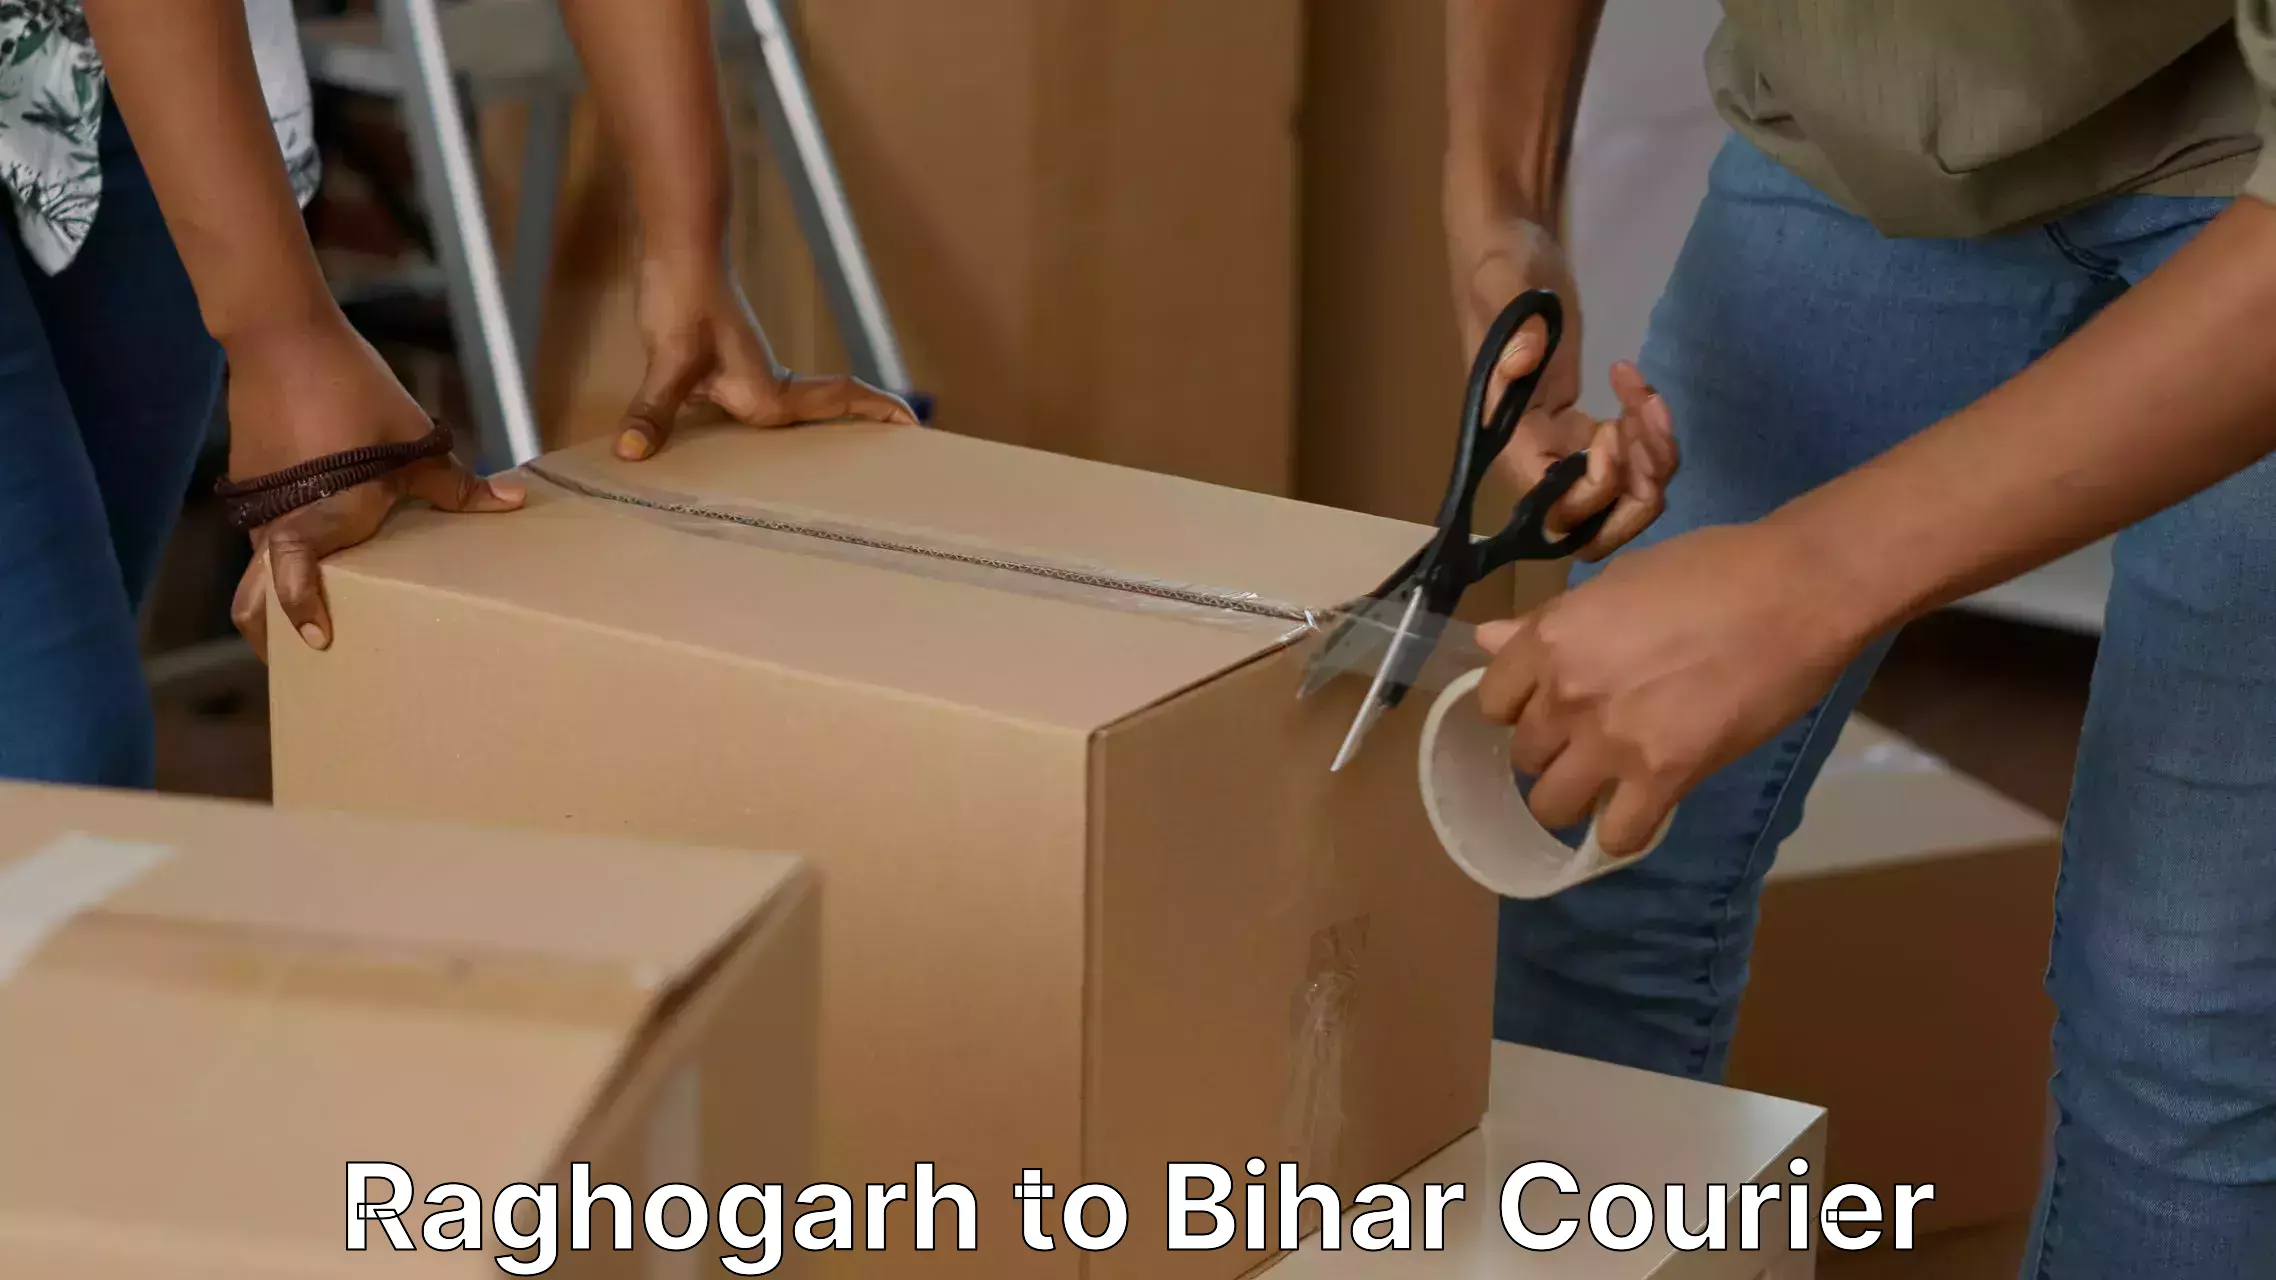 Professional moving company Raghogarh to Dumraon